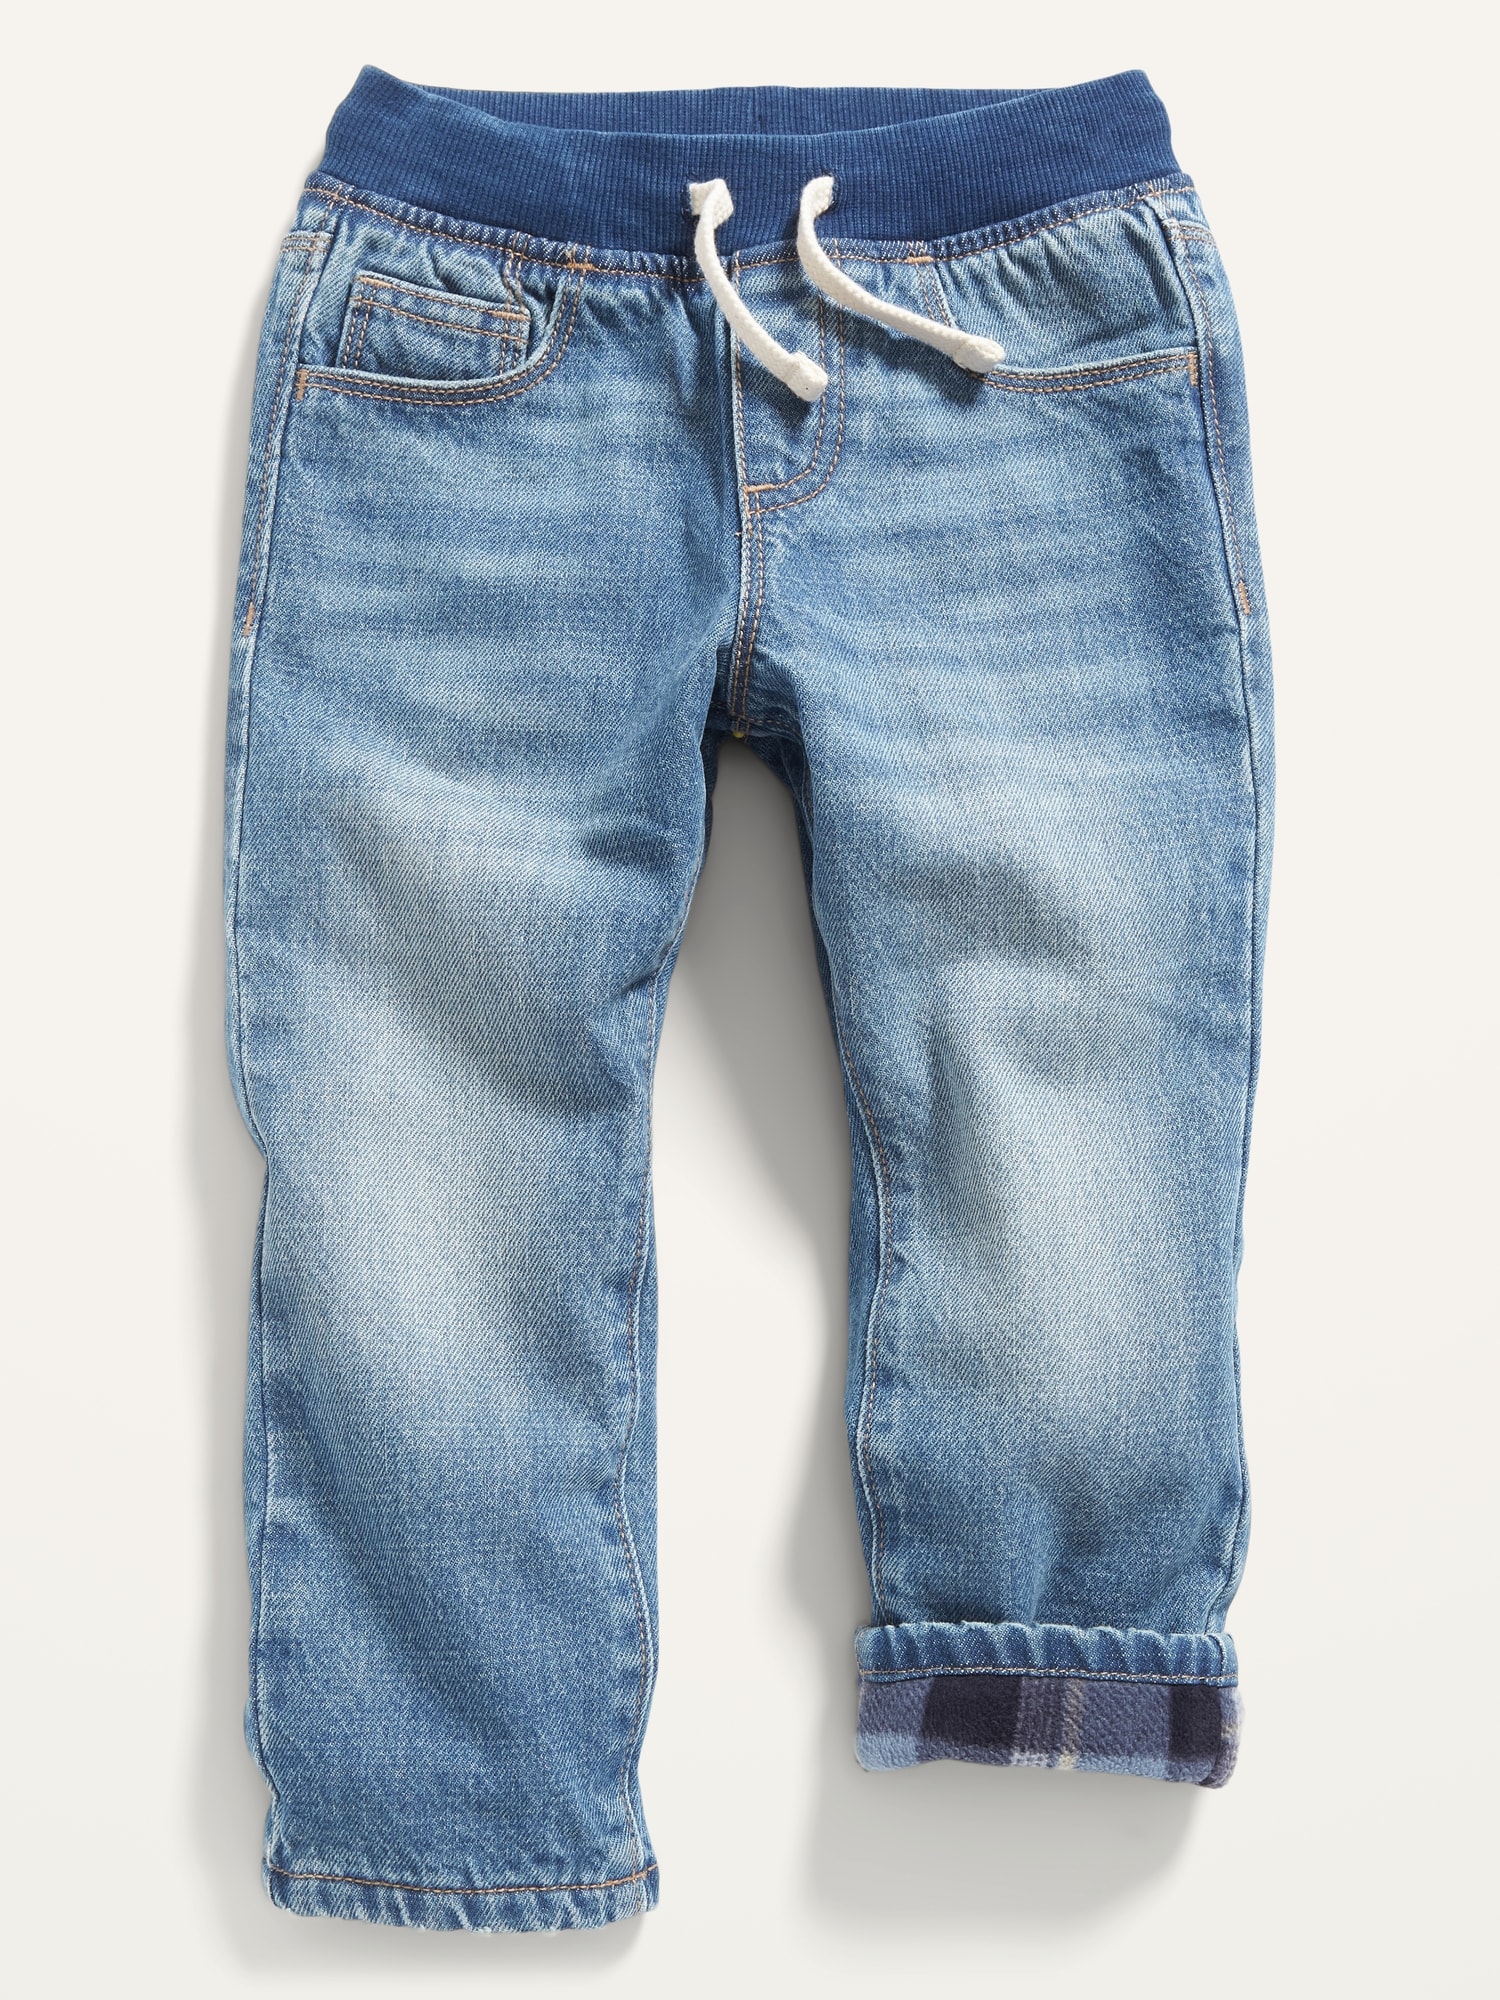 Biekopu Women Fleece Lined Jeans Thermal Flannel Denim Pants Winter Warm  Thicken Skinny Stretch Legging Trousers with Pocket (XS, P-Blue Grey)